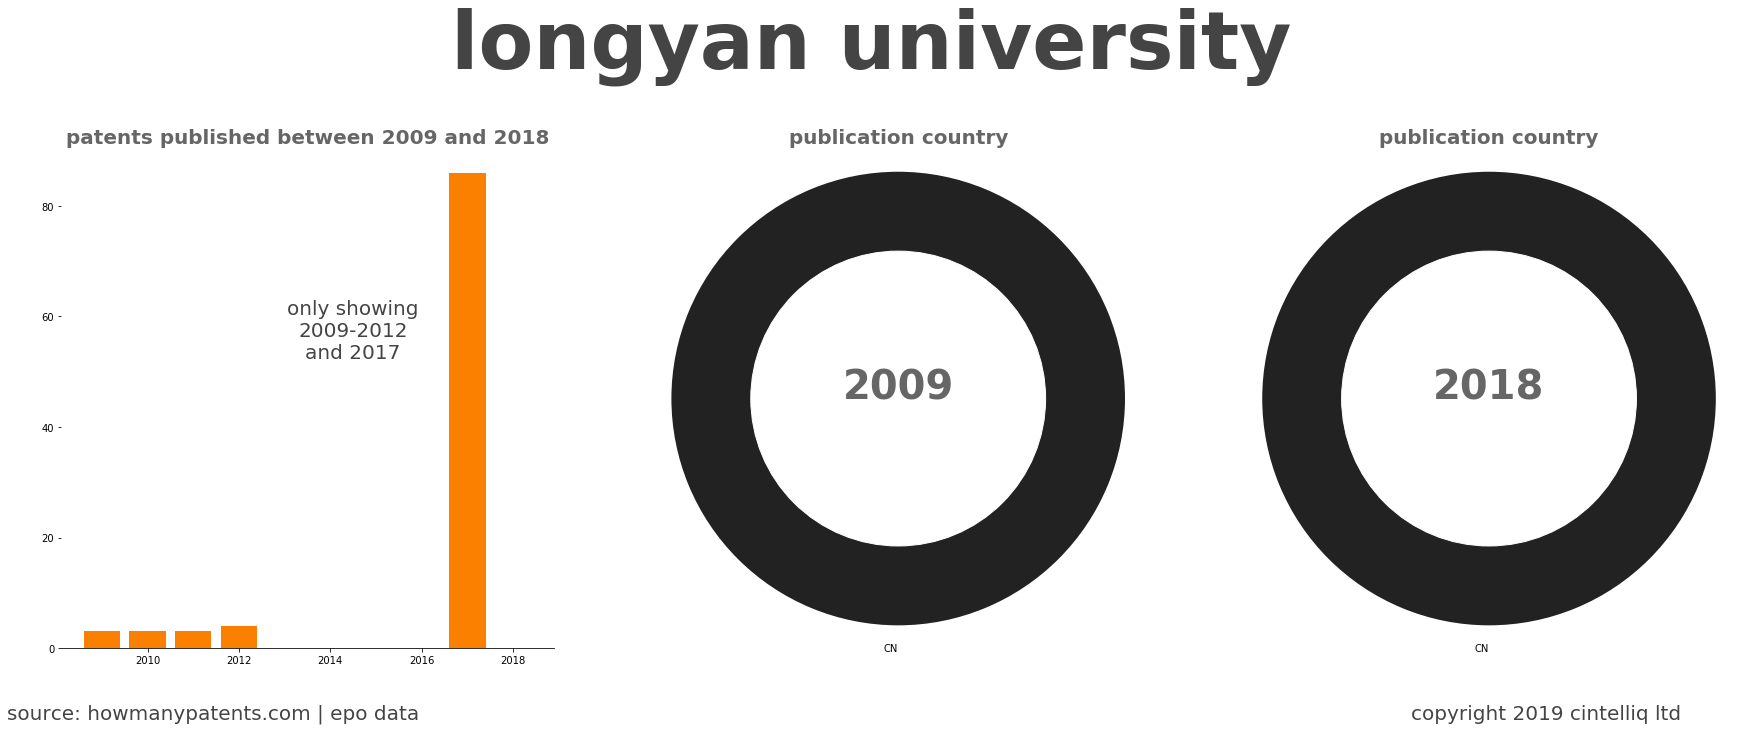 summary of patents for Longyan University